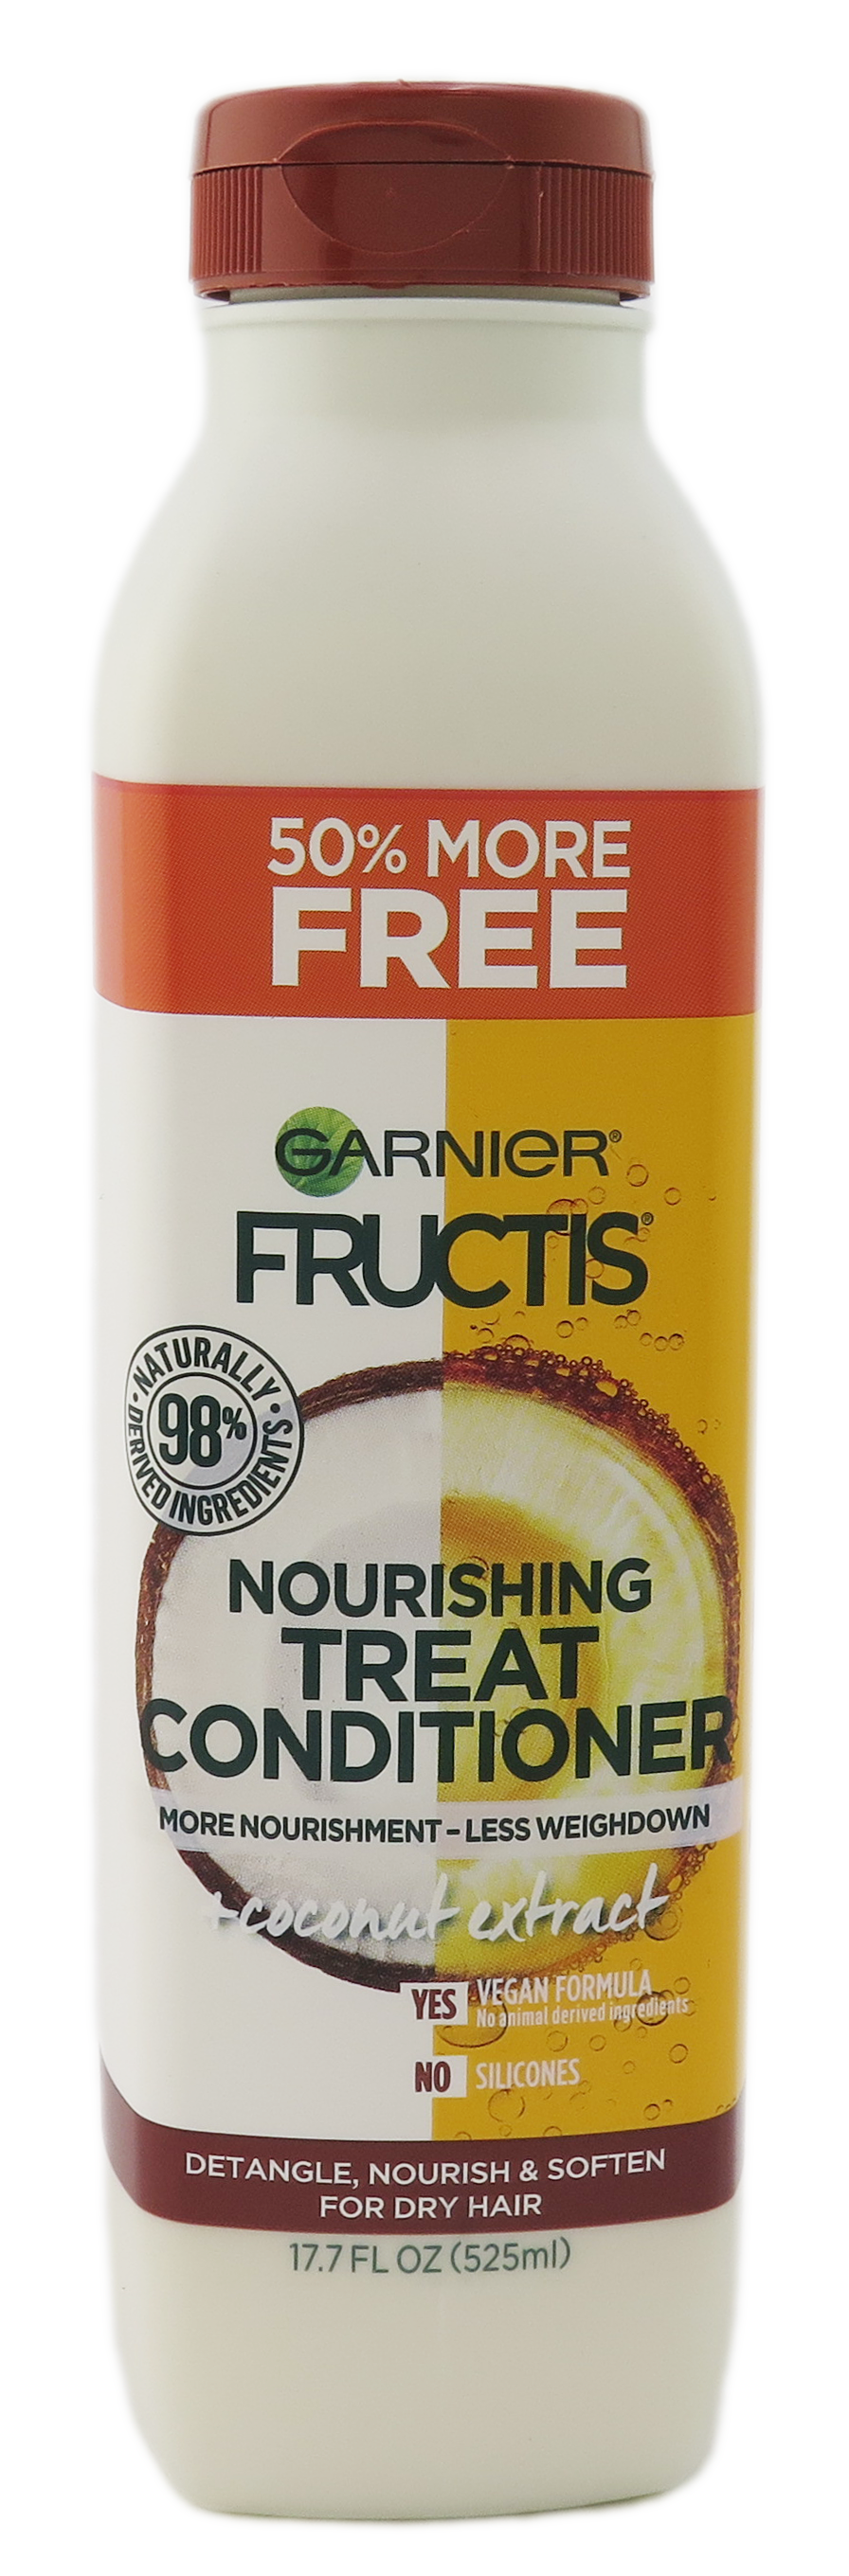 Garnier Fructis Nourishing Treat Conditioner + Coconut Extract 17.7 fl oz